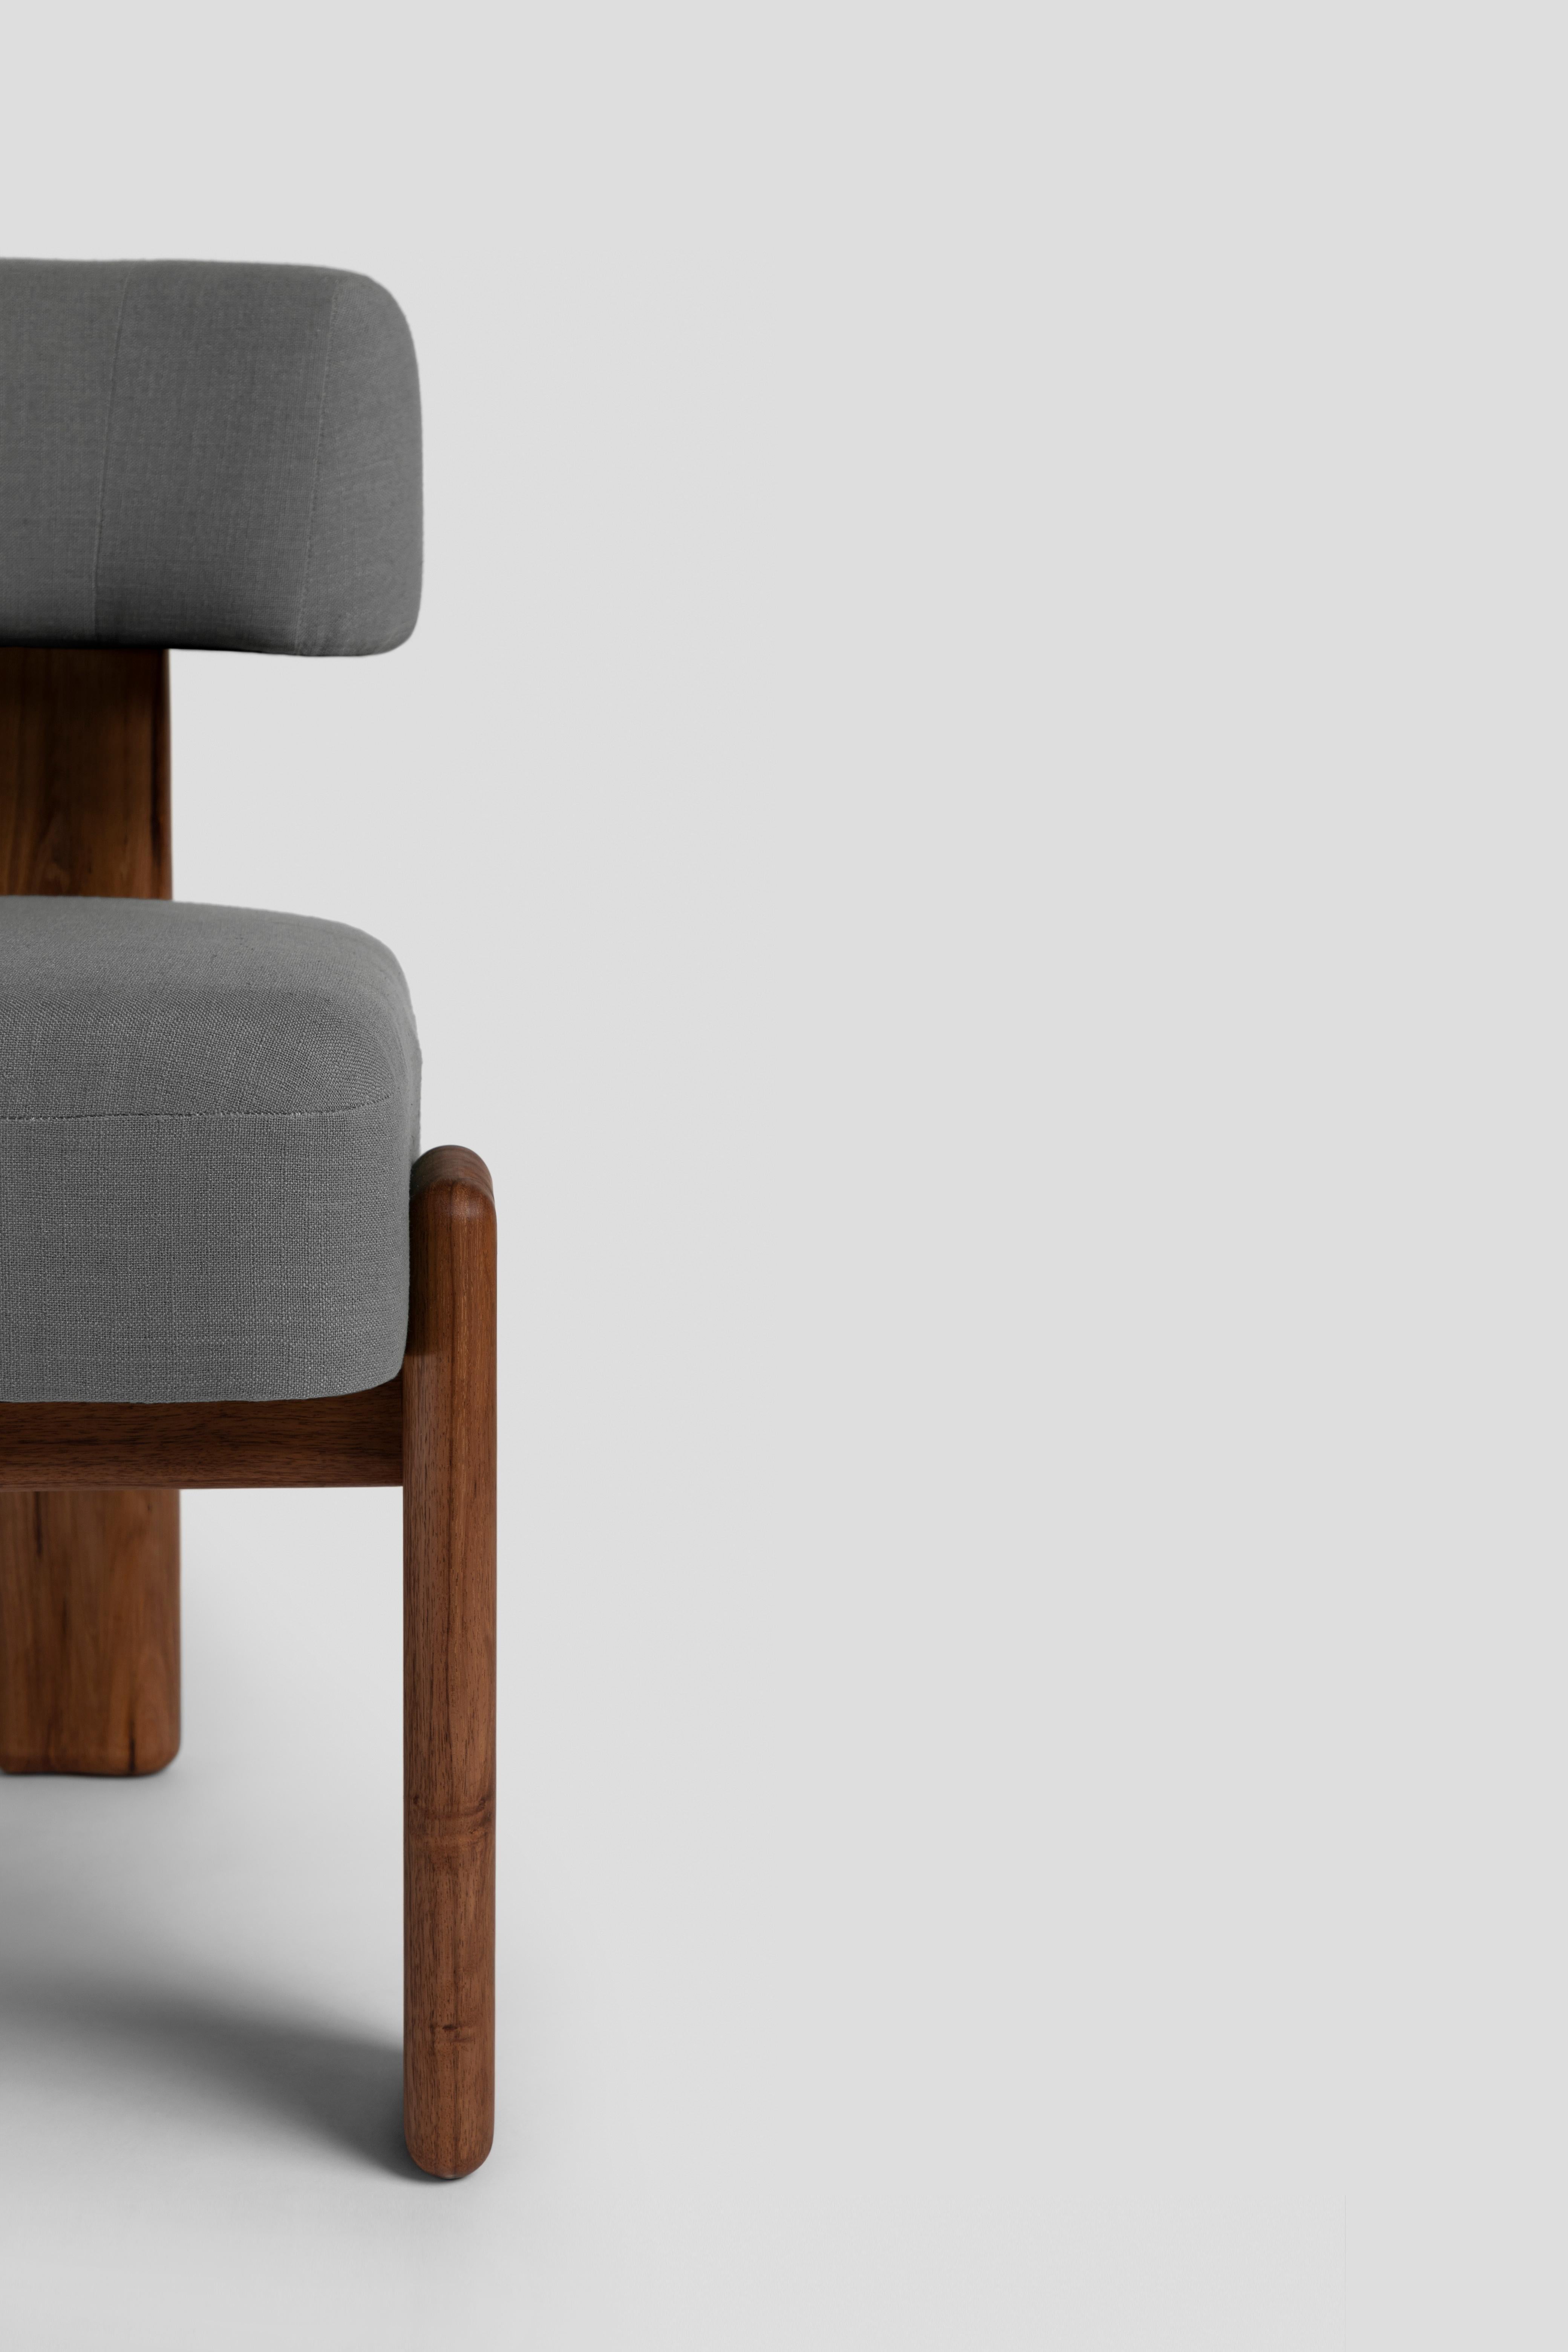 De la Paz Dining Chair Solid Wood, Contemporary Mexican Design For Sale 5